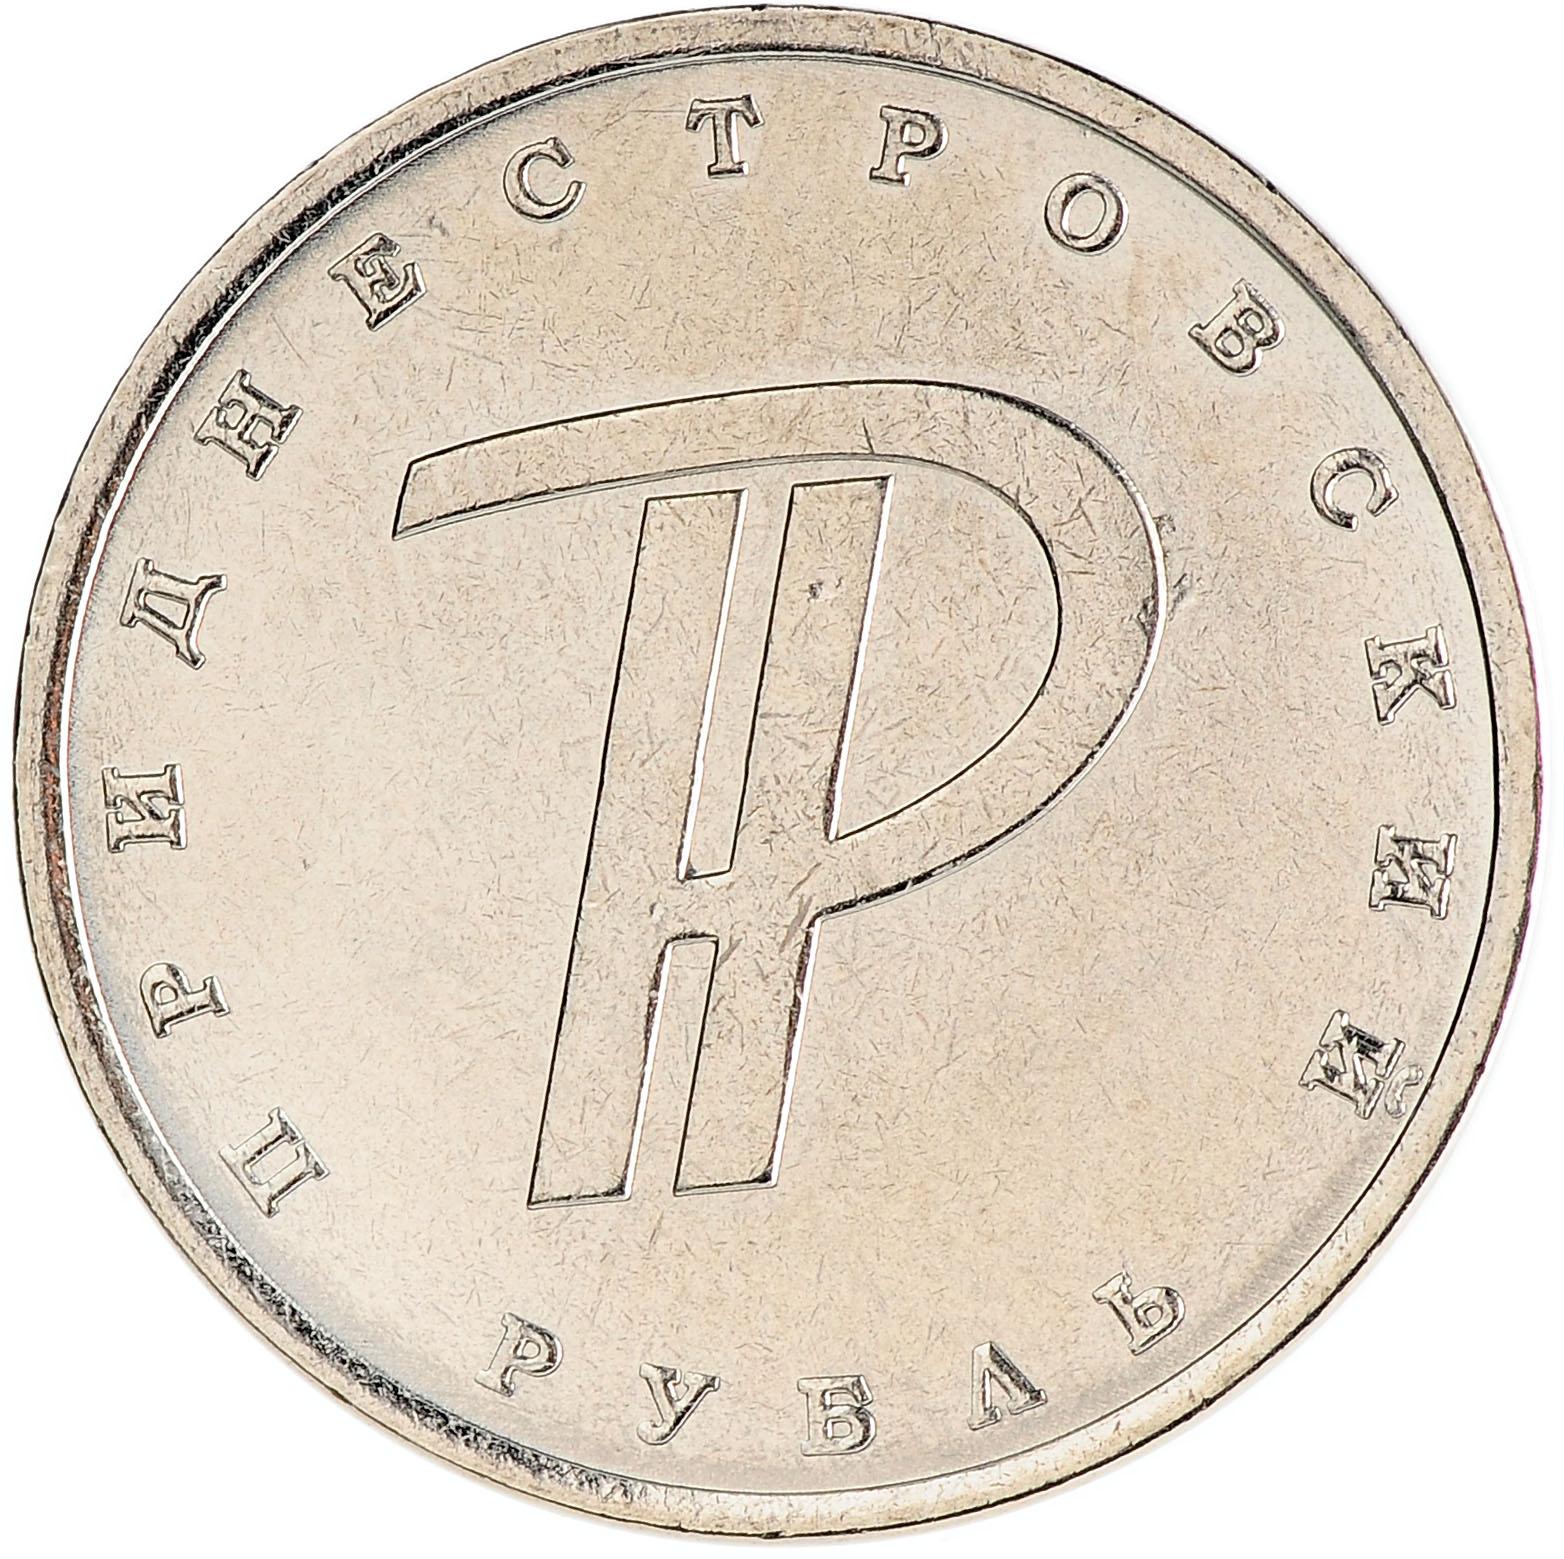 Рубли 2015 года. Монета 1 рубль 2015. Монета знак рубля. Приднестровье 1 рубль 2015. Приднестровский рубль символ.